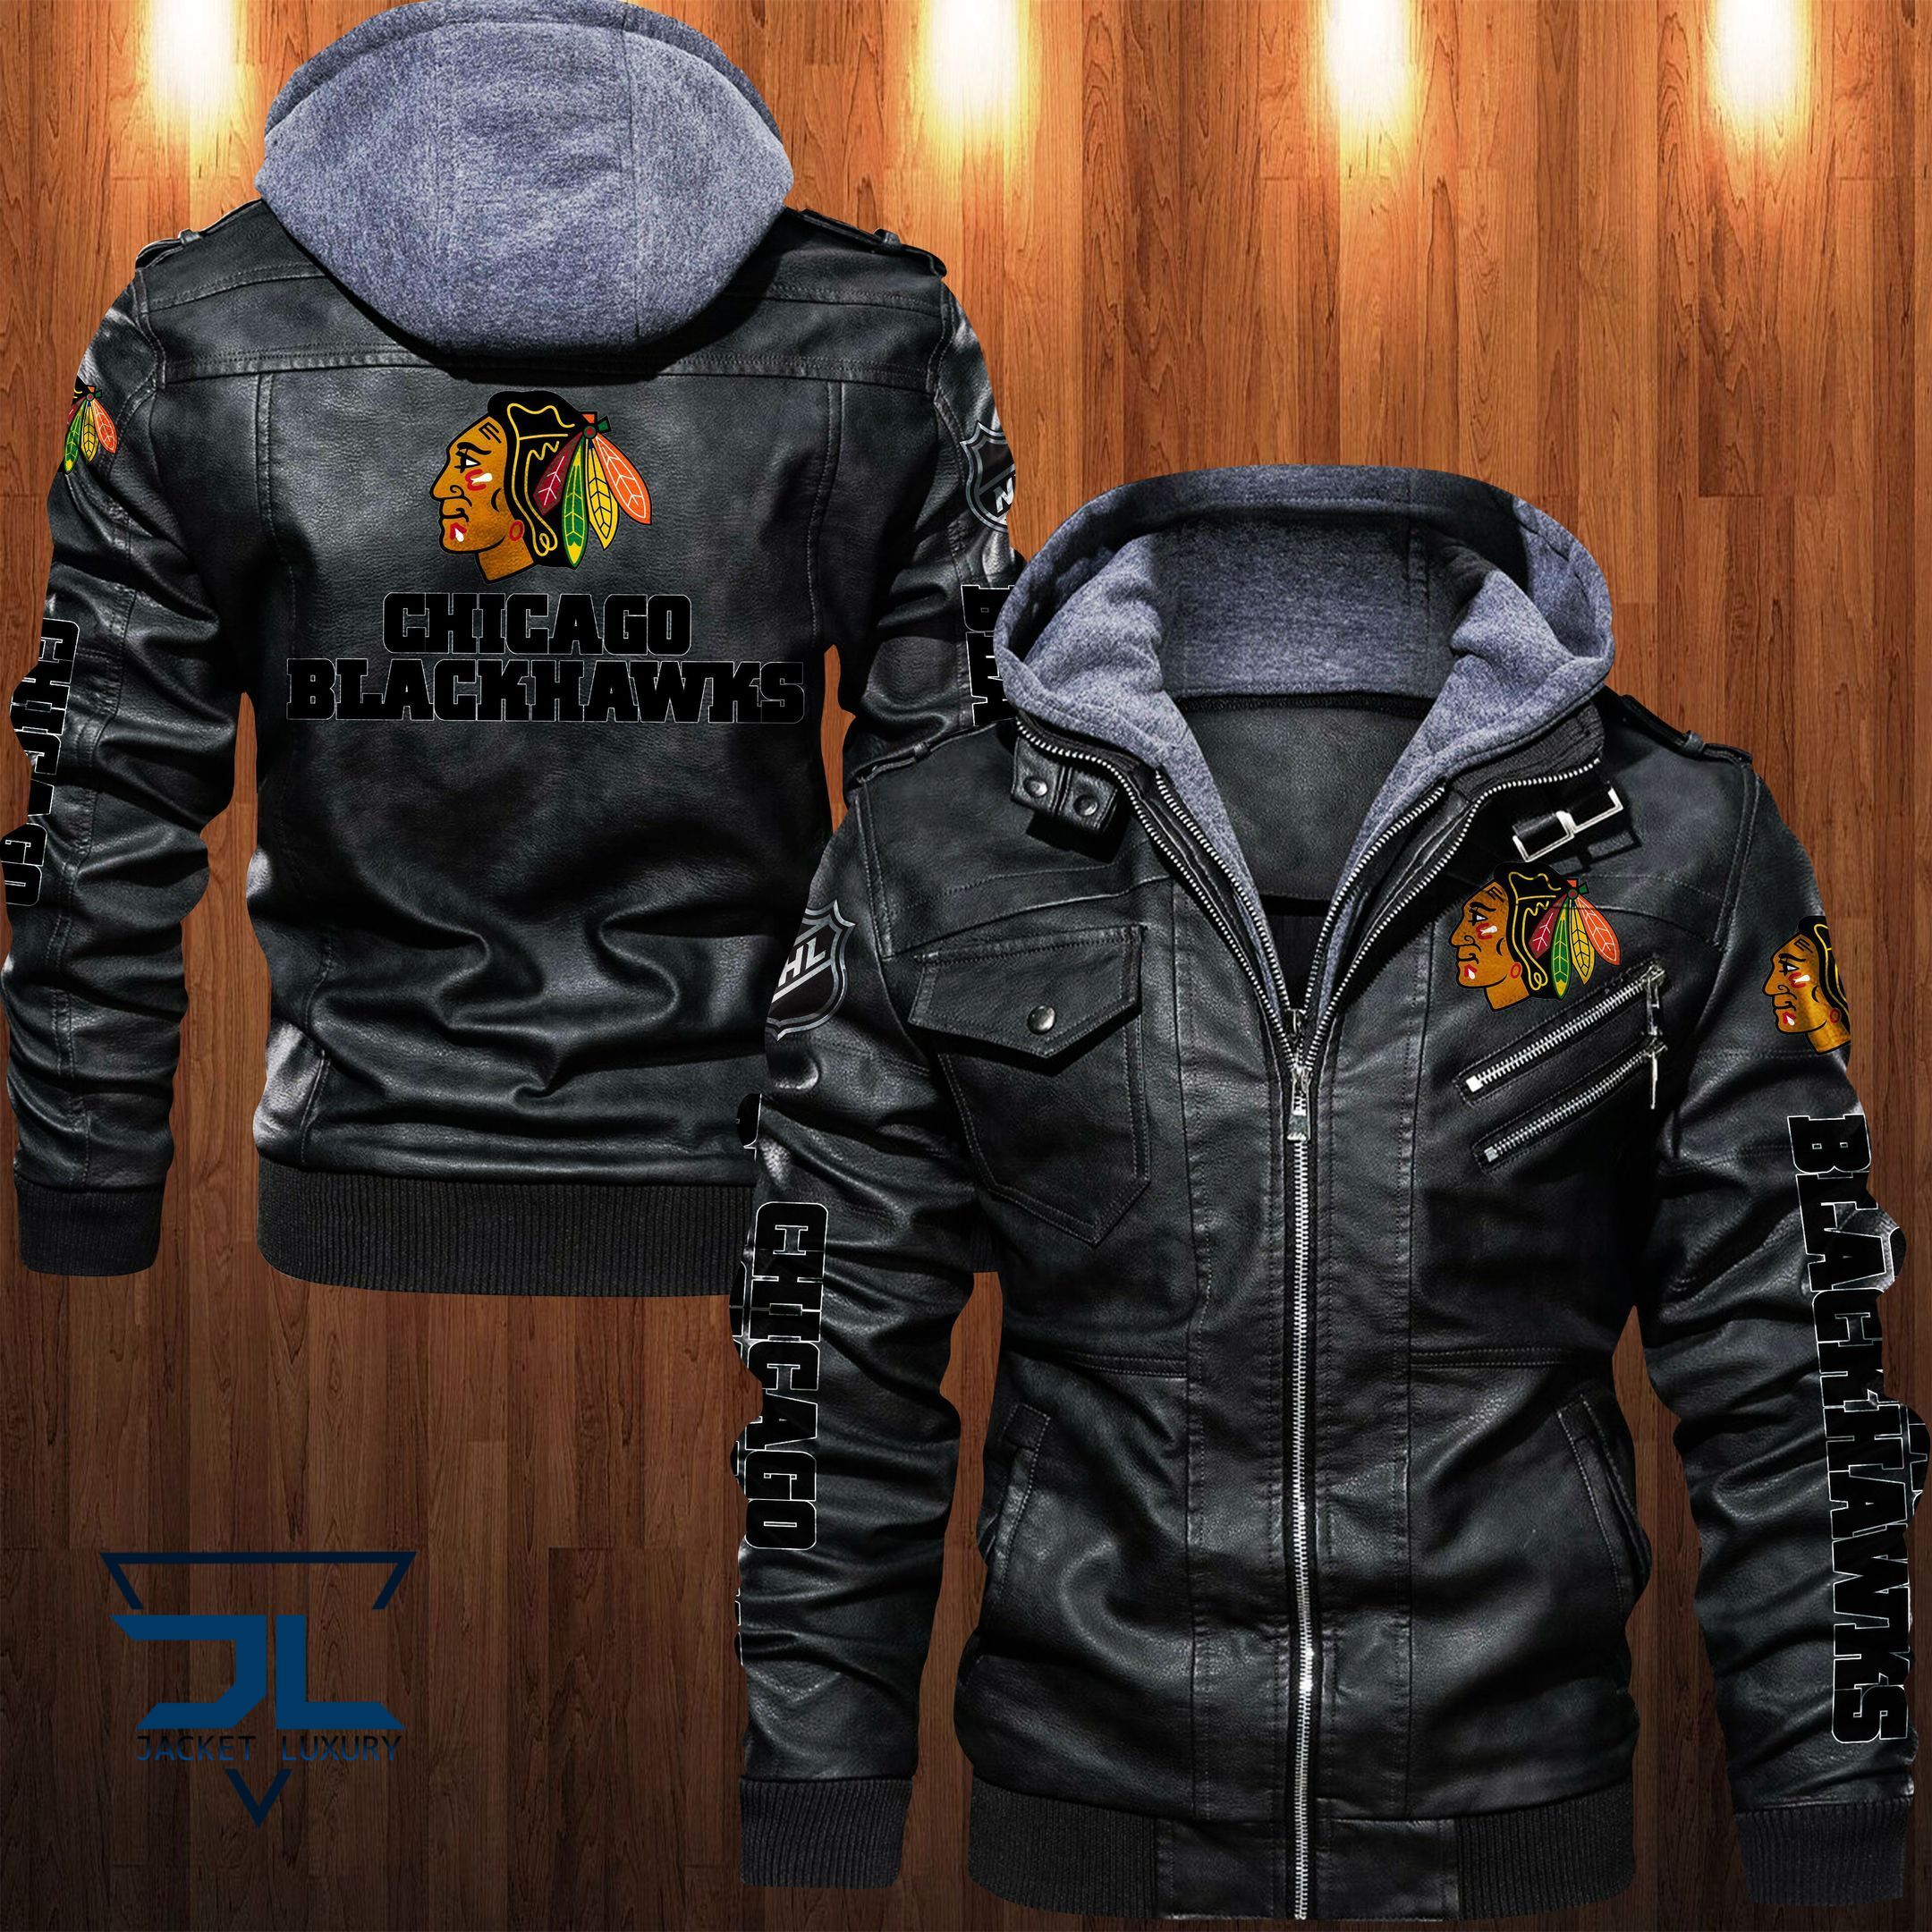 What Leather jacket Sells Best on Techcomshop? 176